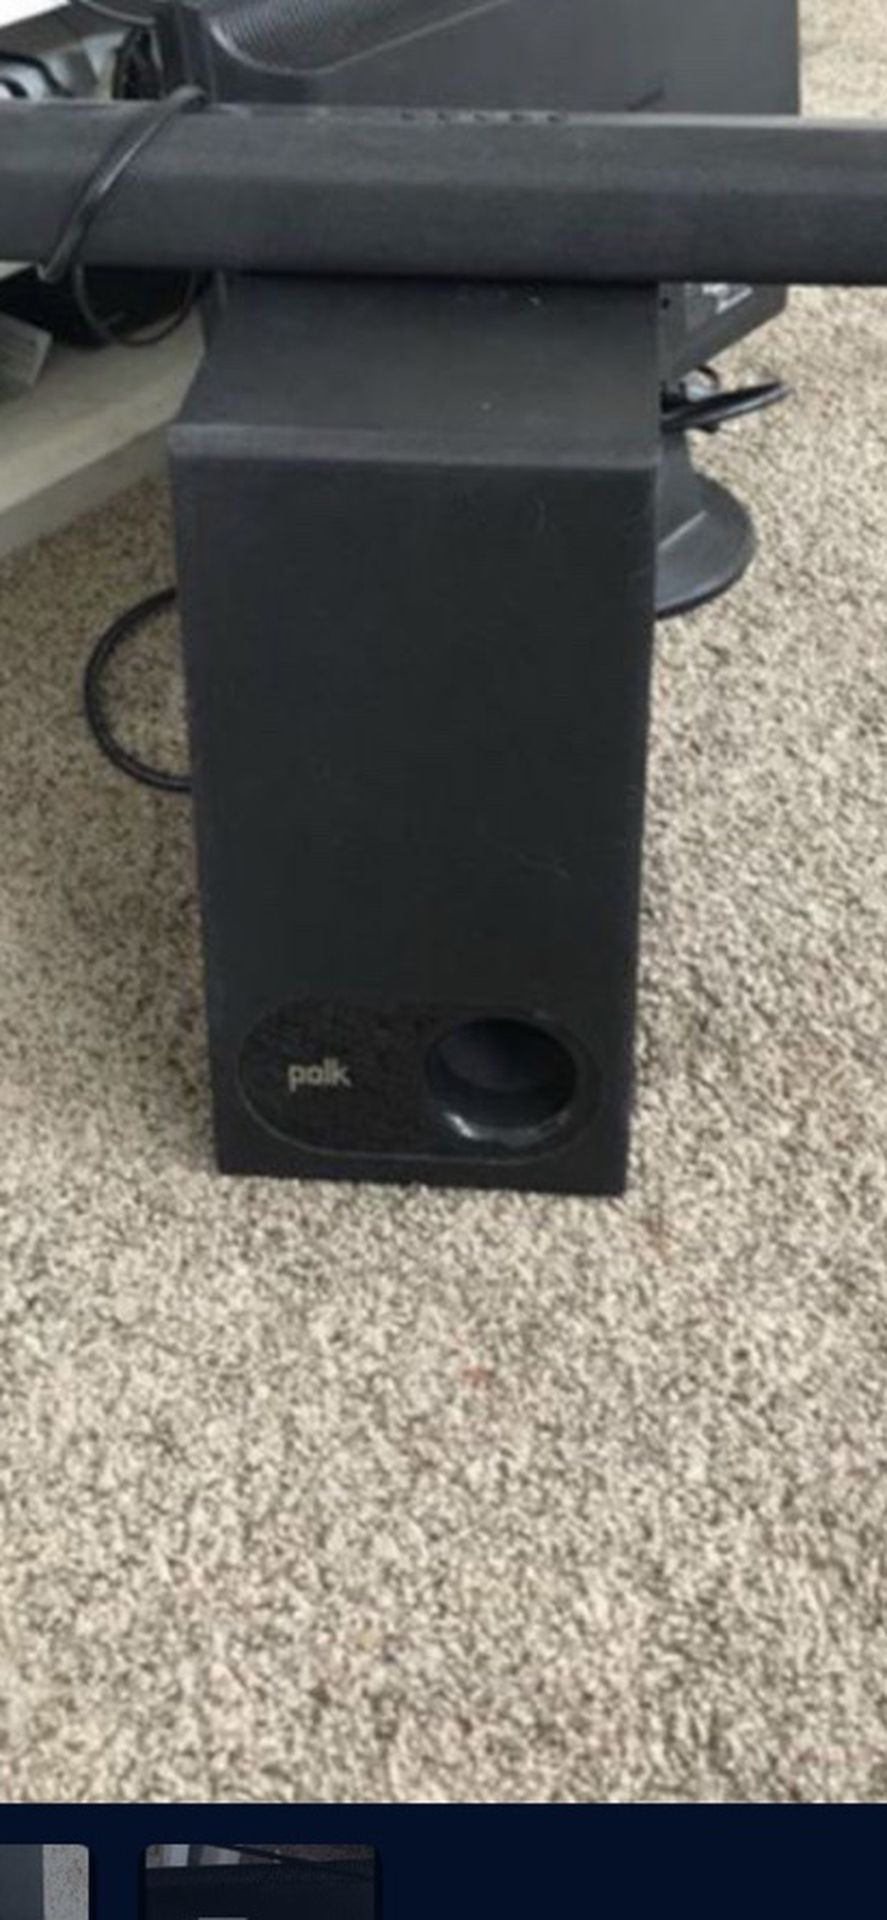 Polk Signa S1 Surround Sound Speaker Bar With Wireless Subwoofer And Remote.